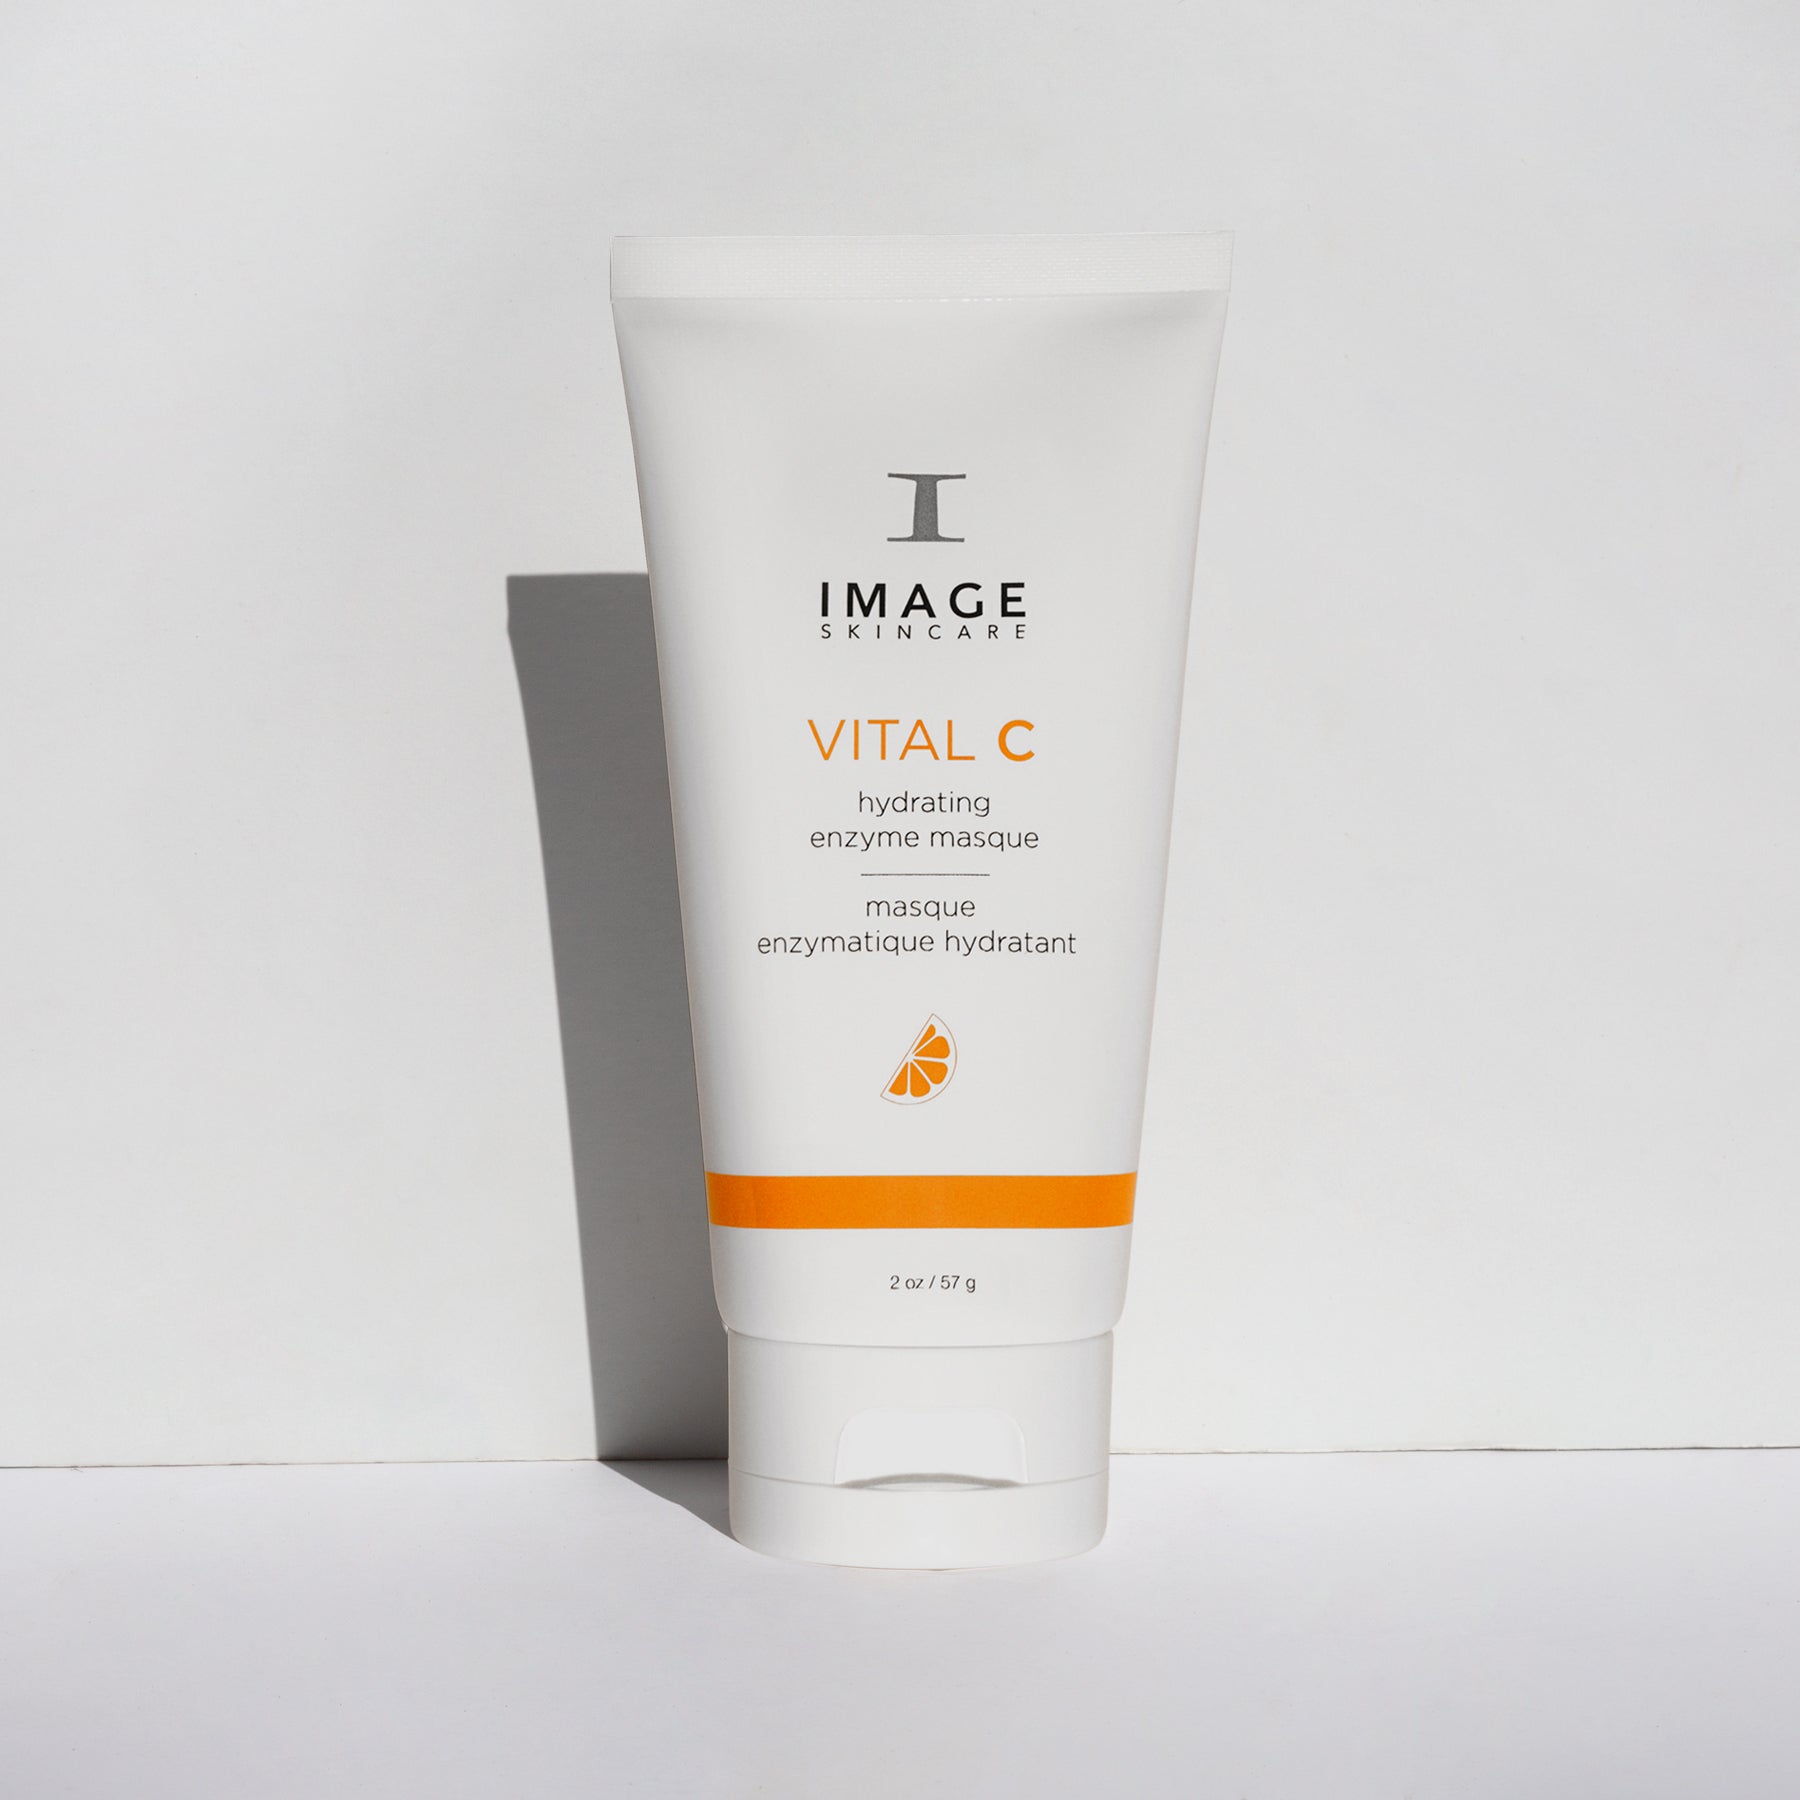 VITAL C hydrating enzyme masque | IMAGE Skincare